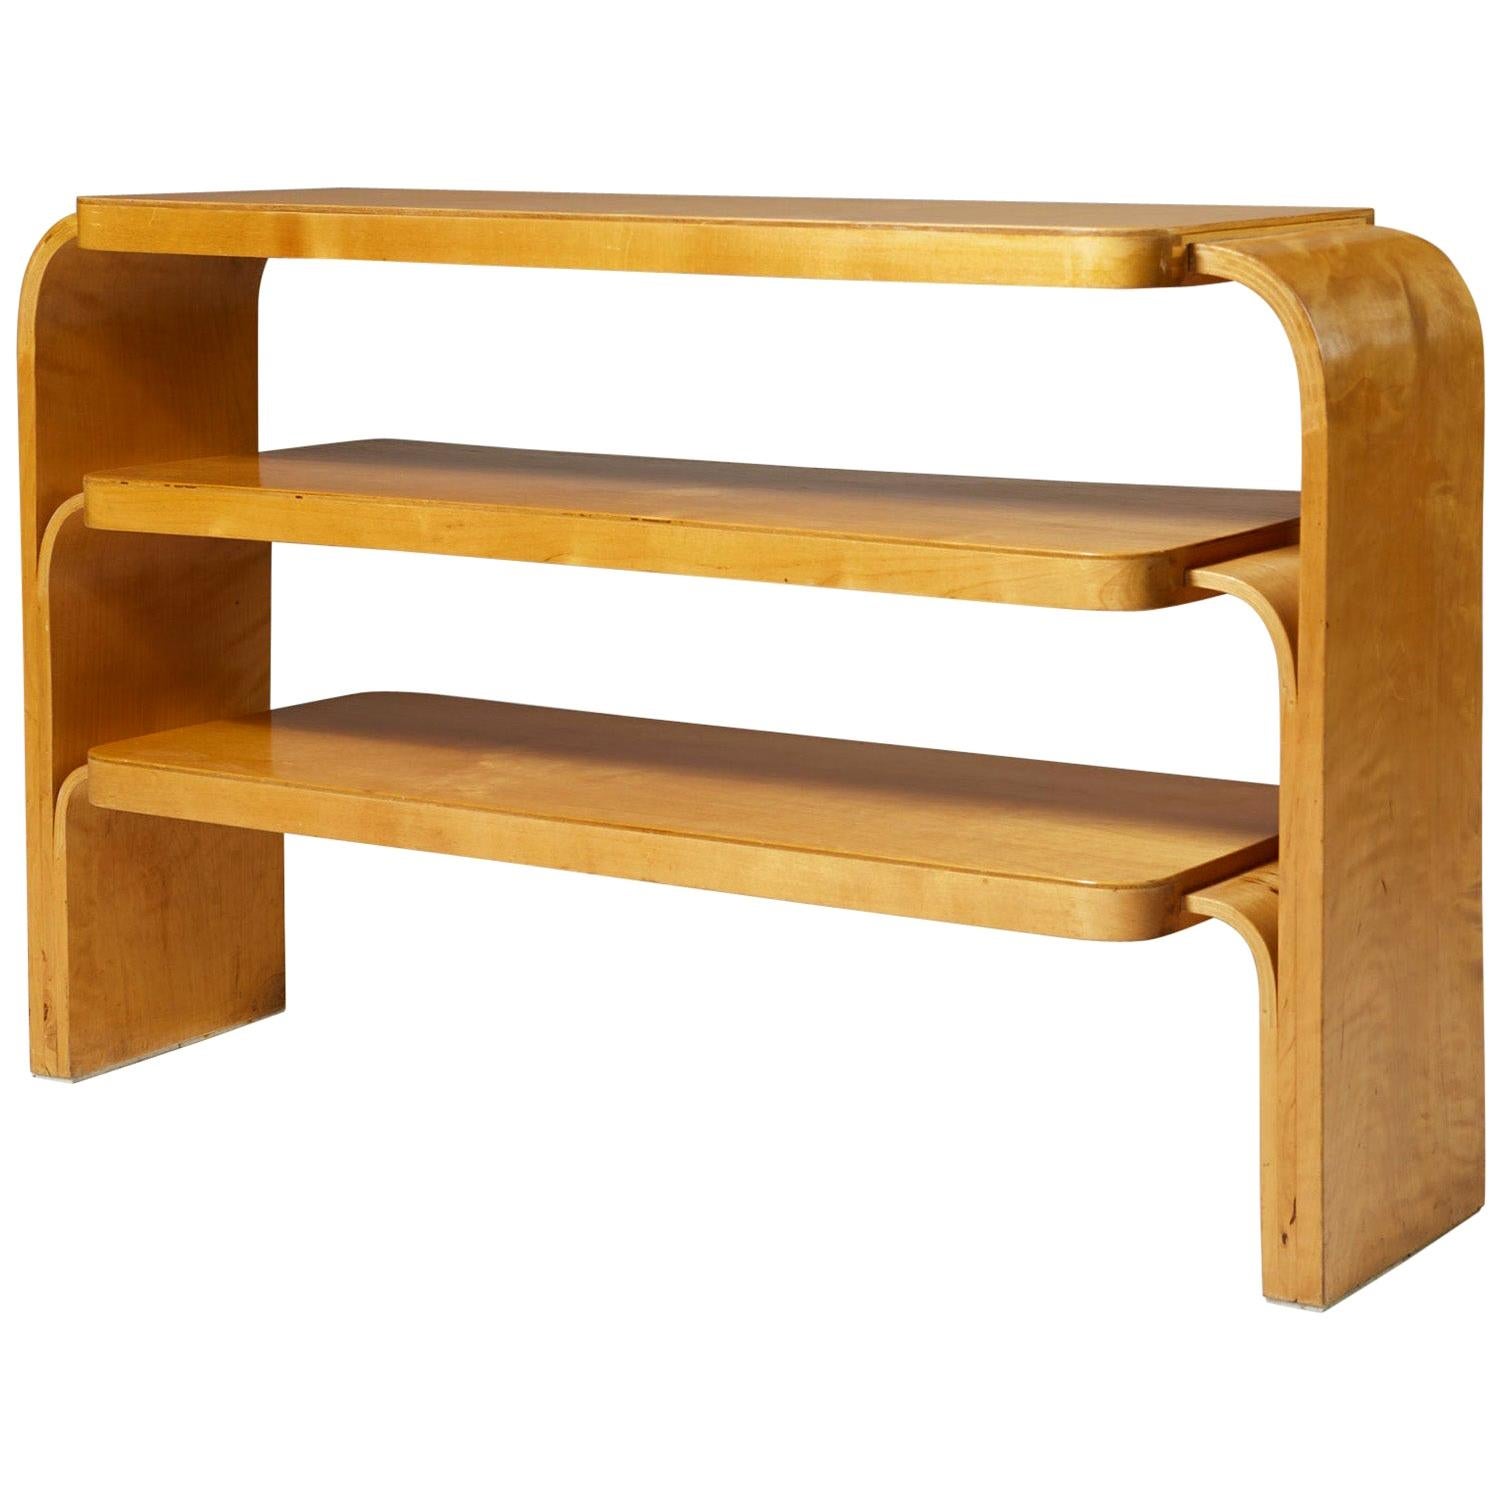 Alvar Aalto Case Pieces and Storage Cabinets - 13 For Sale at 1stDibs |  aalto shelf, alvar aalto plywood suitcase worth, alvar aalto sideboard